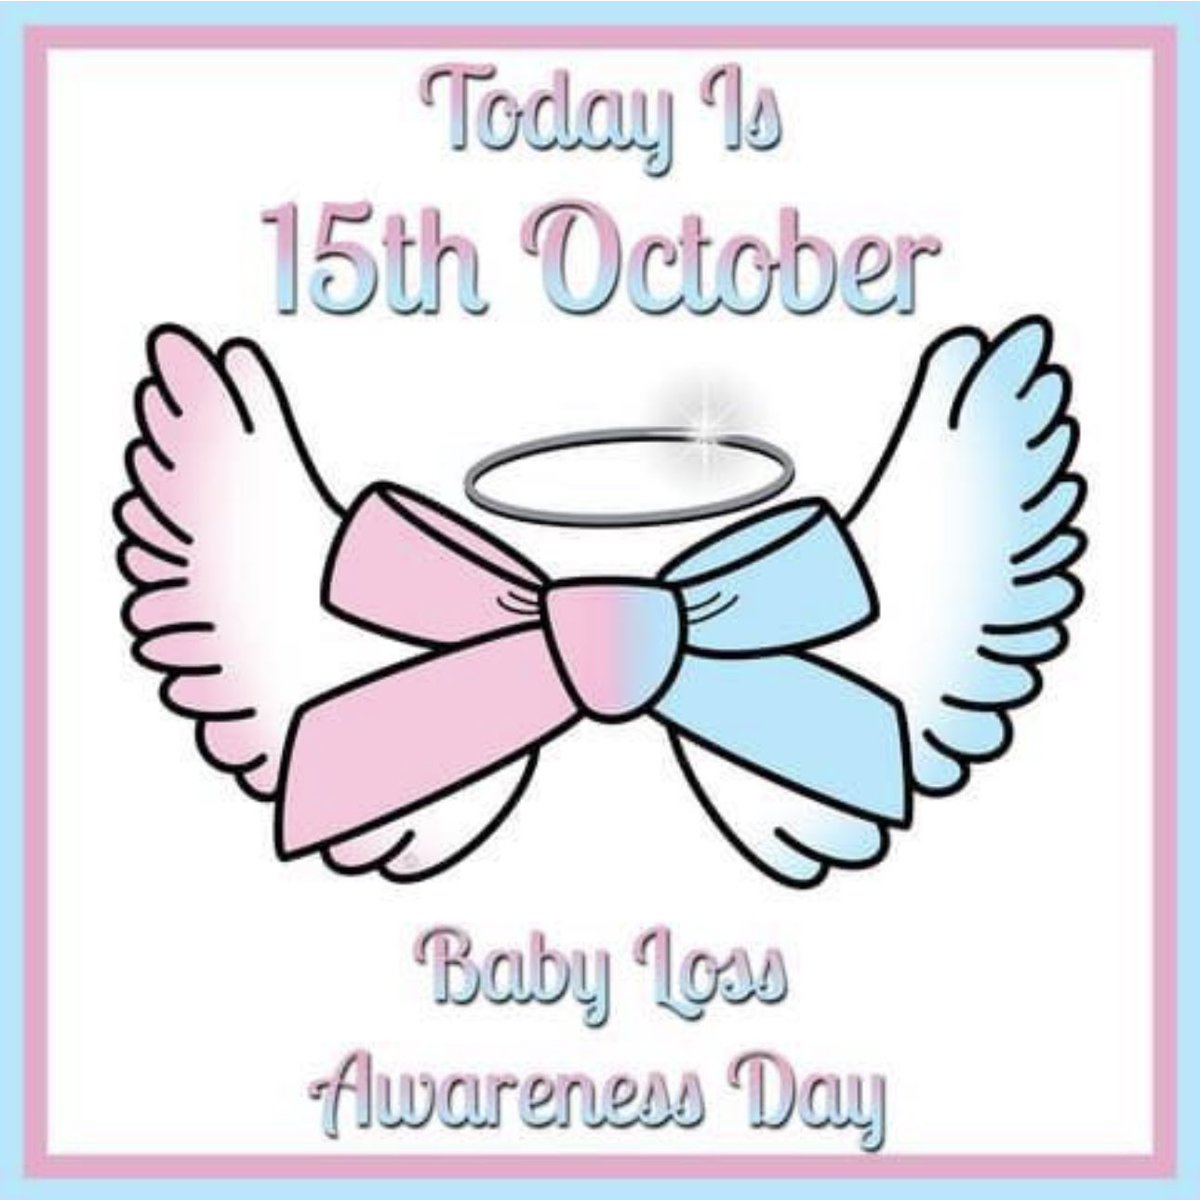 🩵🩷BABY LOSS AWARENESS🩷🩵
littlebabyandco.com
earlymiscarriageawarenessday.com
#October15th #WaveOfLight
#EarlyMiscarriageAwarenessDay #EMAD
#EarlyMiscarriage
#EarlyMiscarriageWaveOfLight
#EMWOL #EMWOL23 #Miscarriage #BabyLoss
#PregnancyLoss #Angel  #AngelBaby